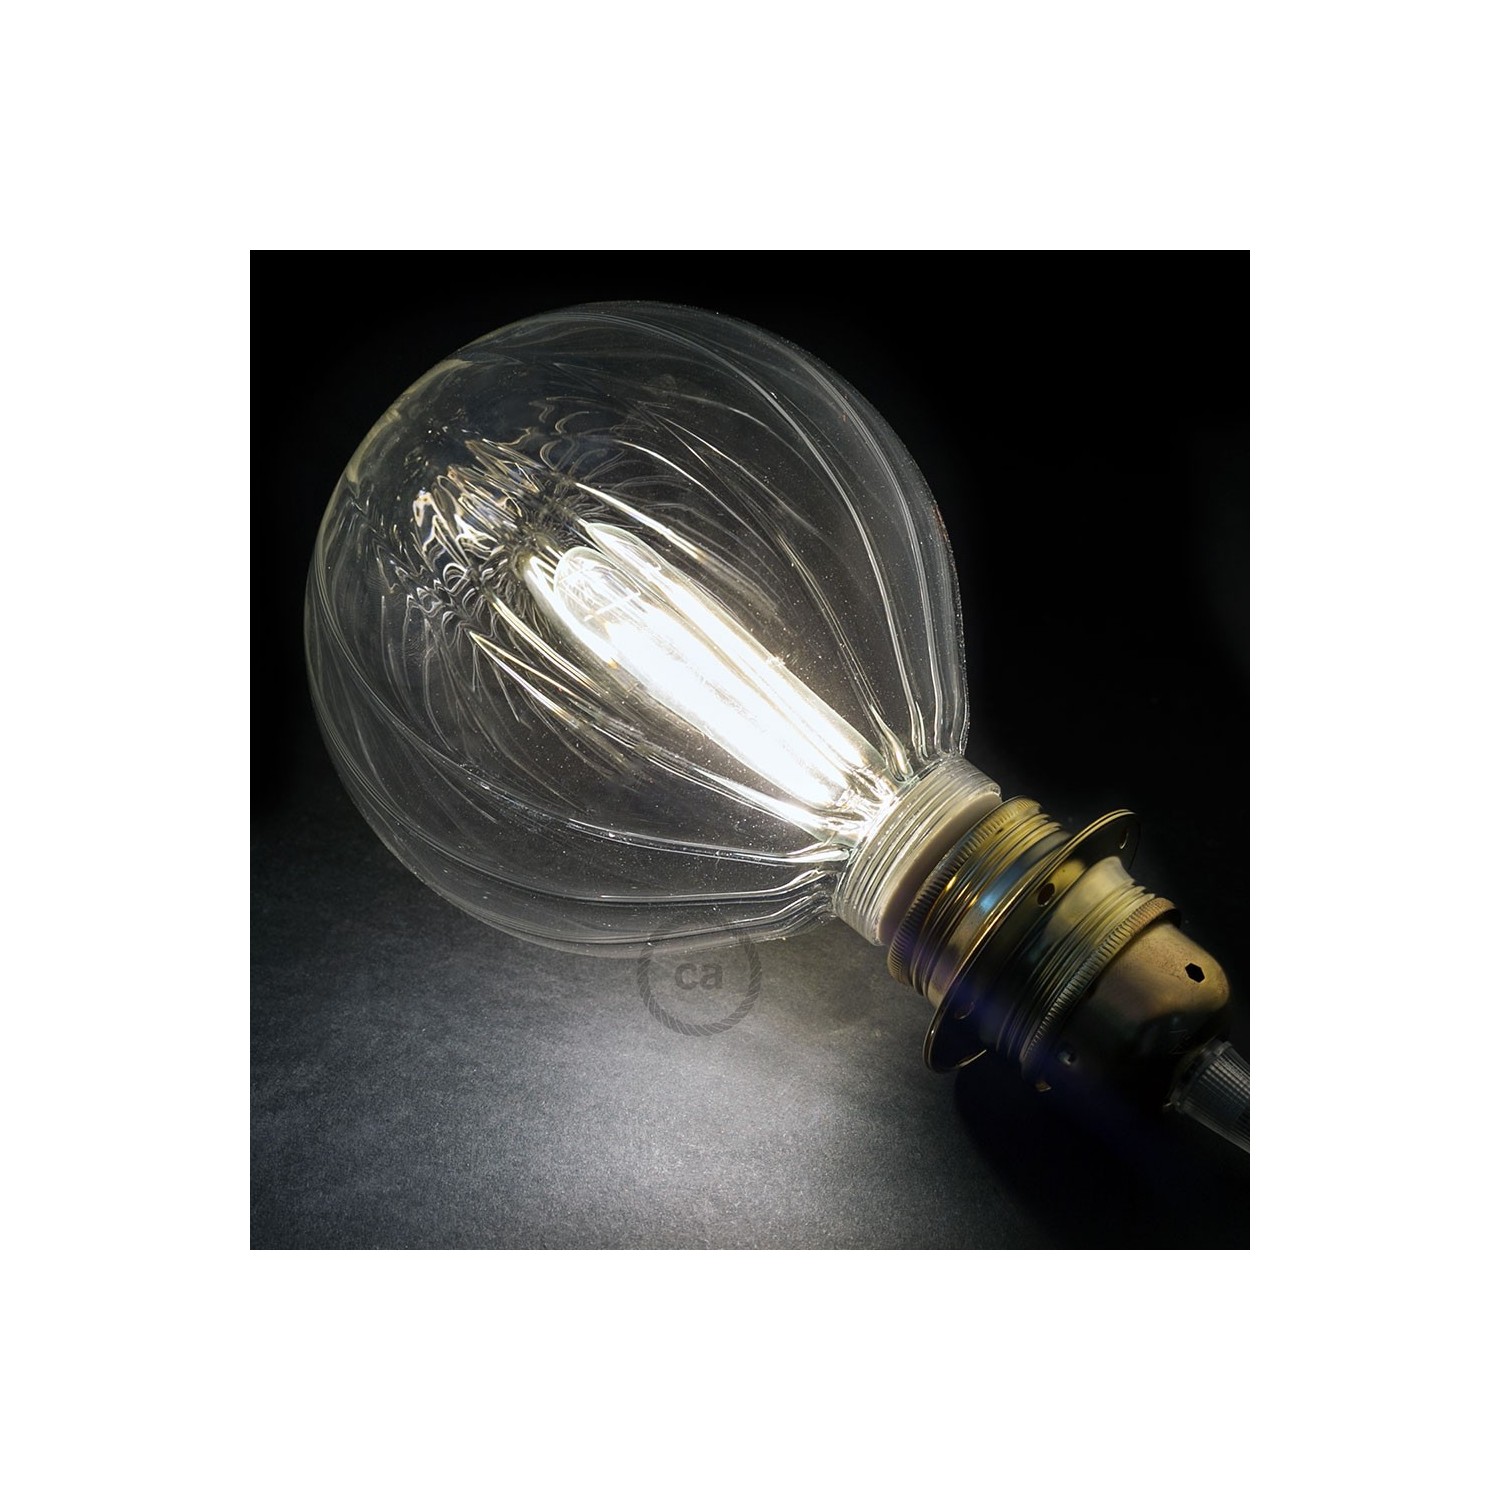 Bombillo Decorativa Modular LED G125 en vidrio trasparente silueta globo de 5W en luz cálida - KG125140SLFC01